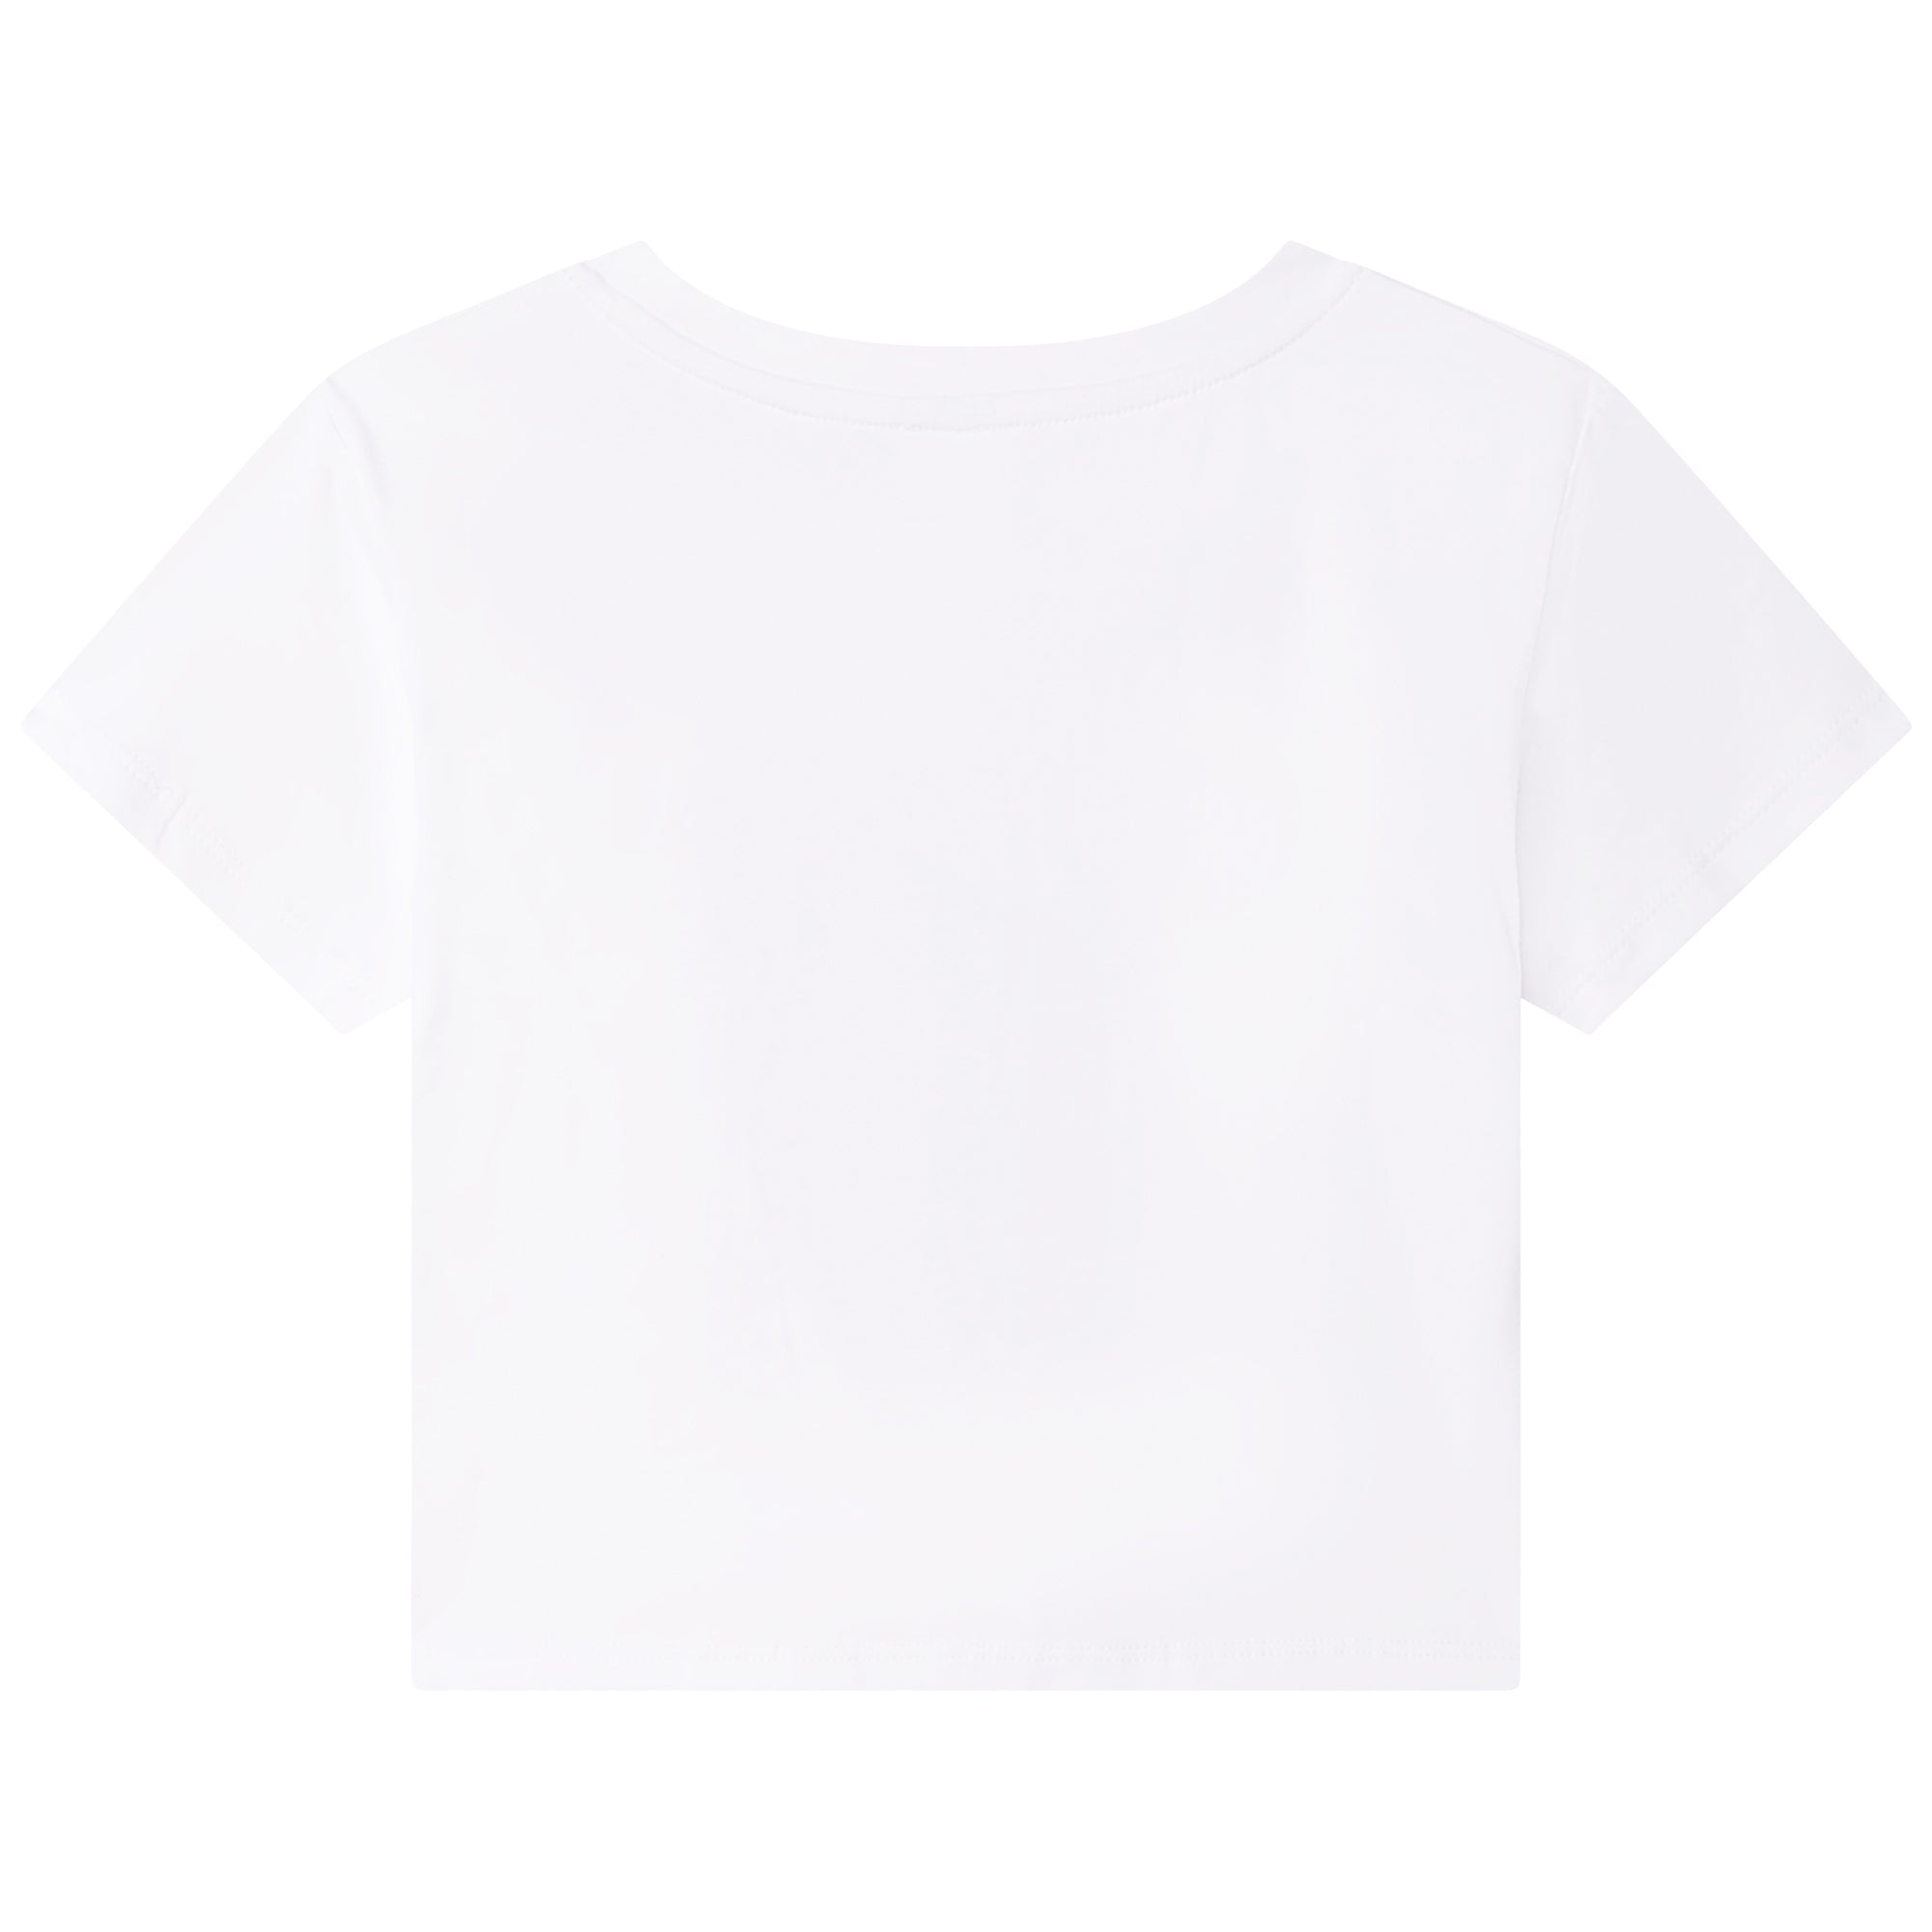 Michael Kors Chain Cropped T-Shirt